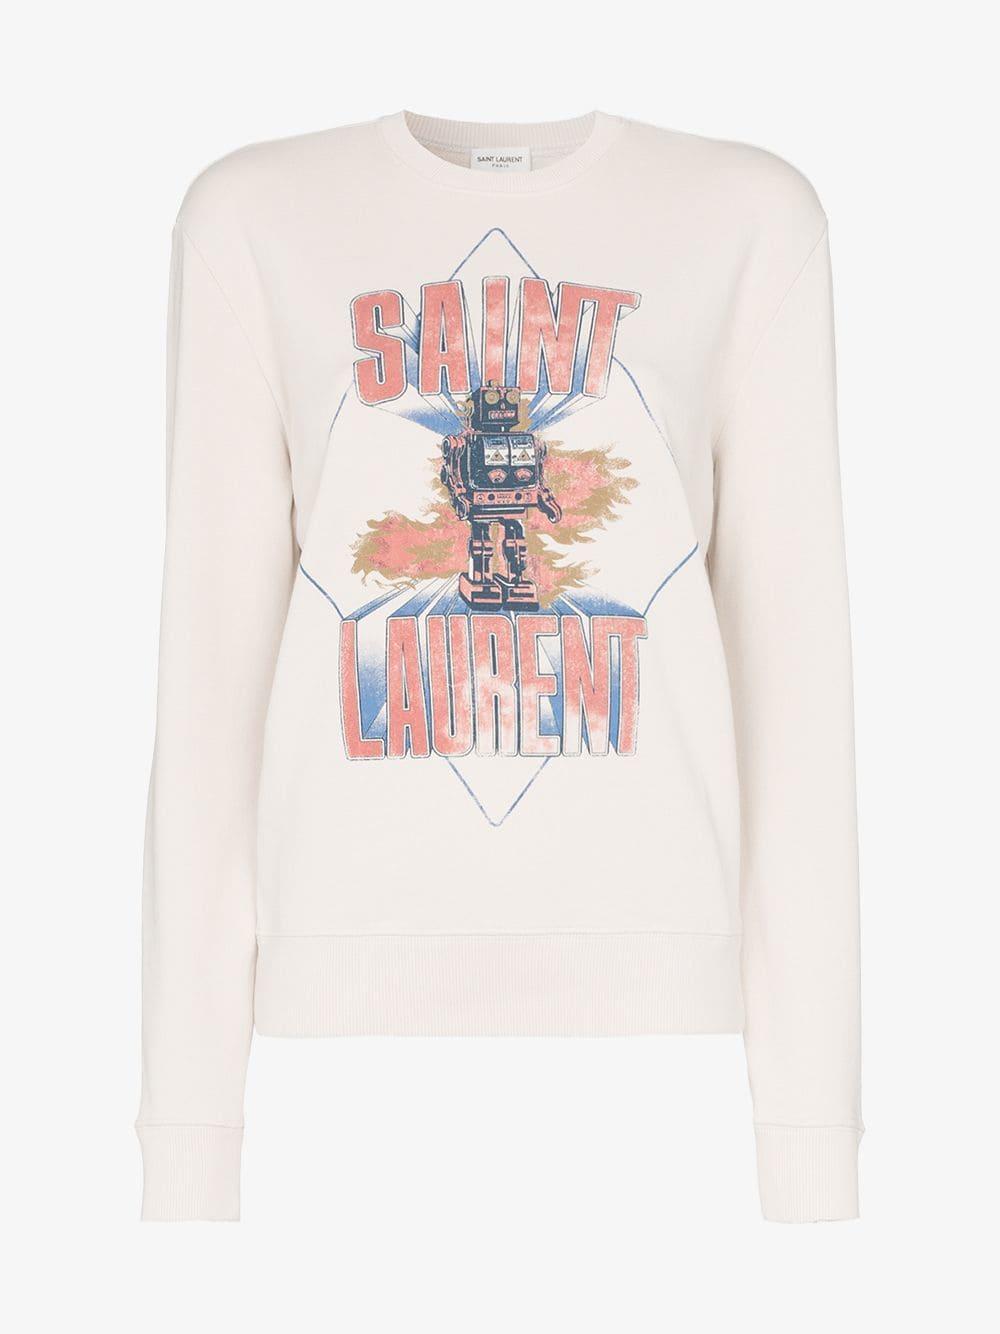 Saint Laurent " Robot" Destroy Sweatshirt in White | Lyst